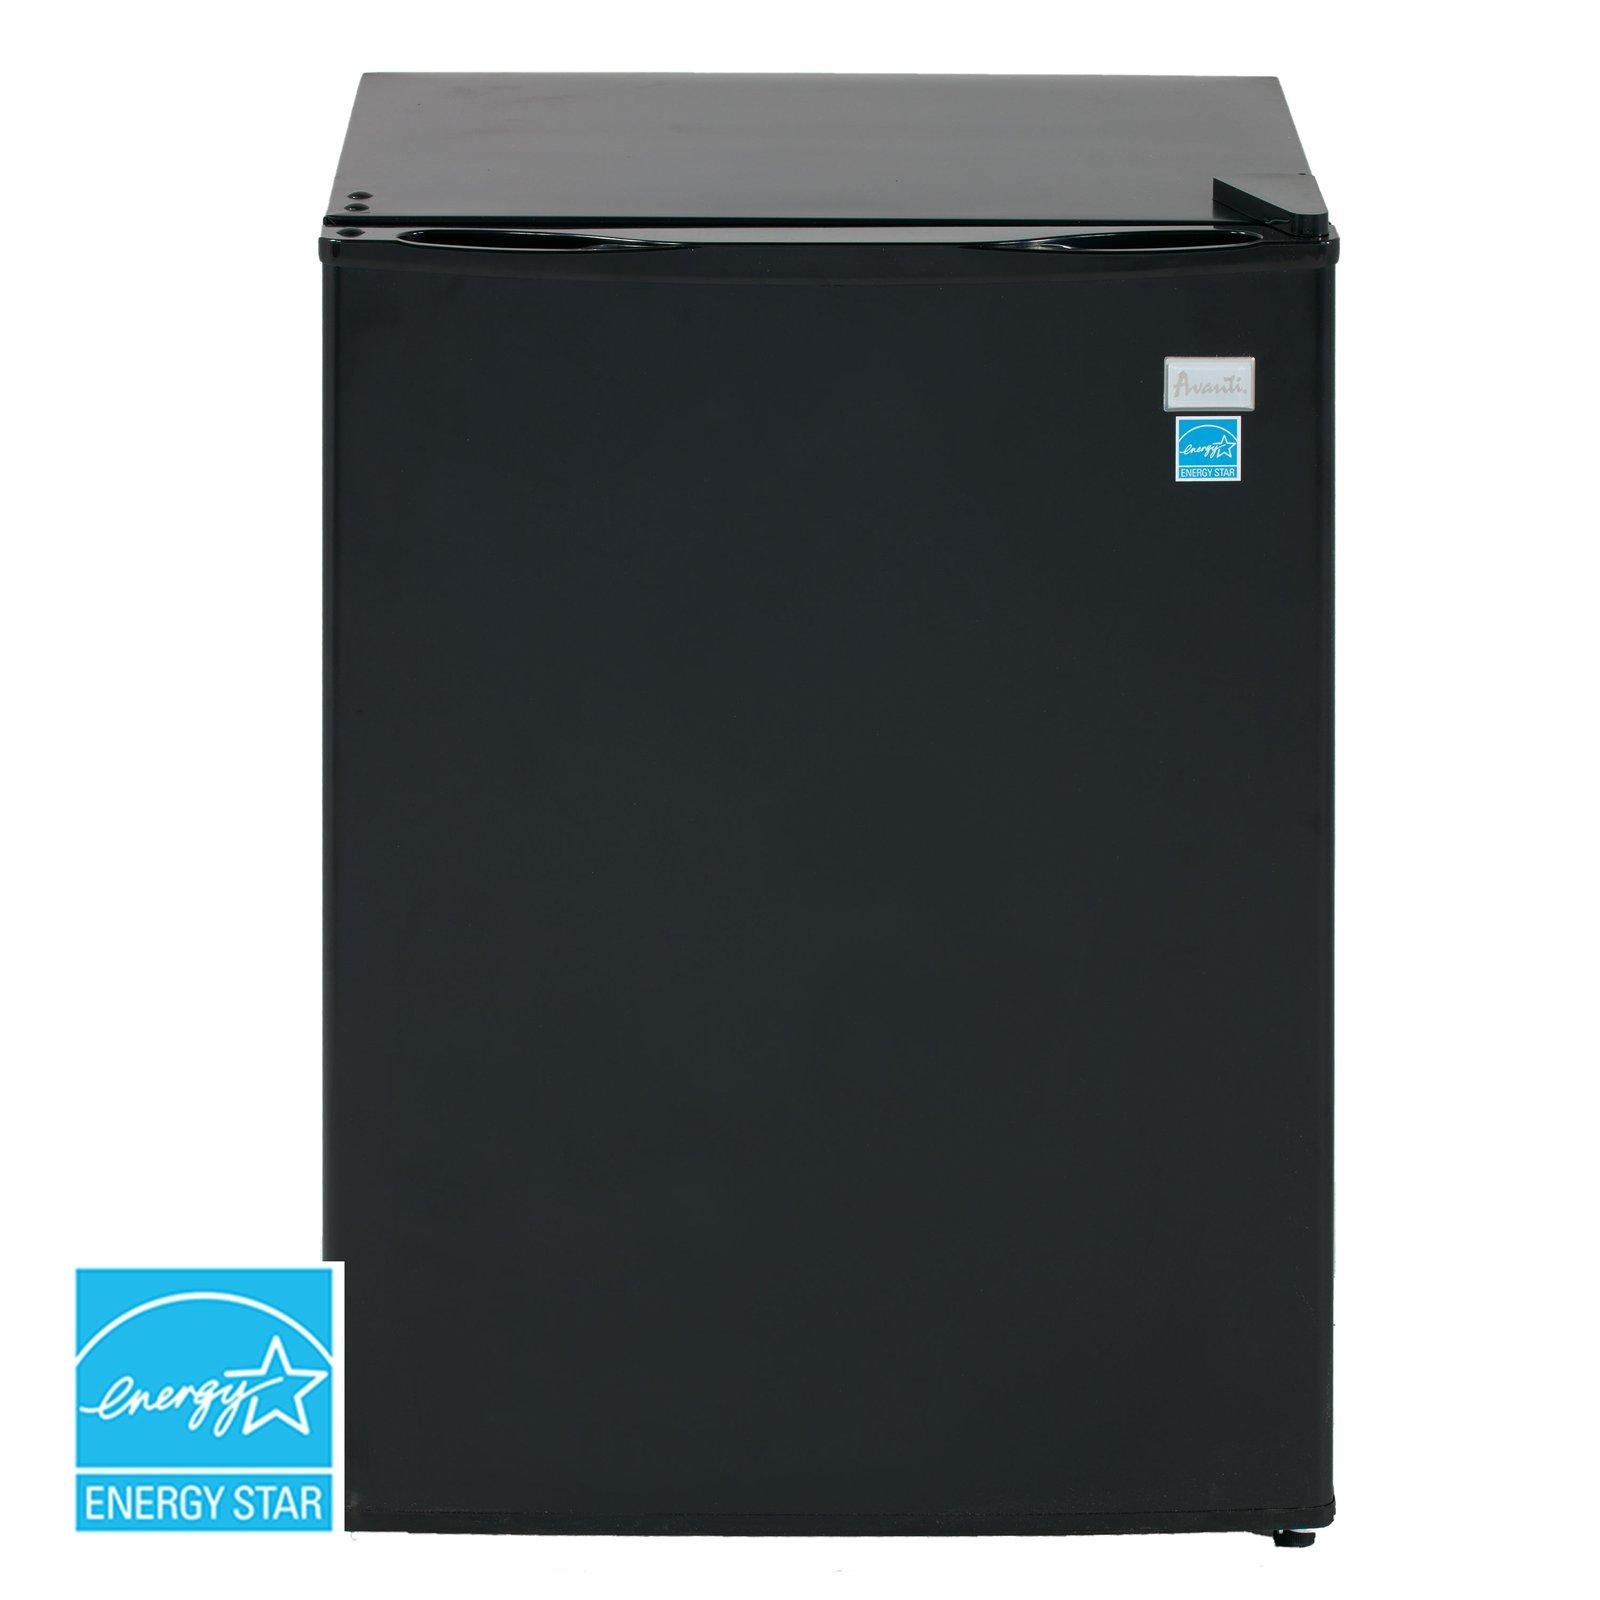 Haier 2.7 Cu. Ft. White Compact Refrigerator